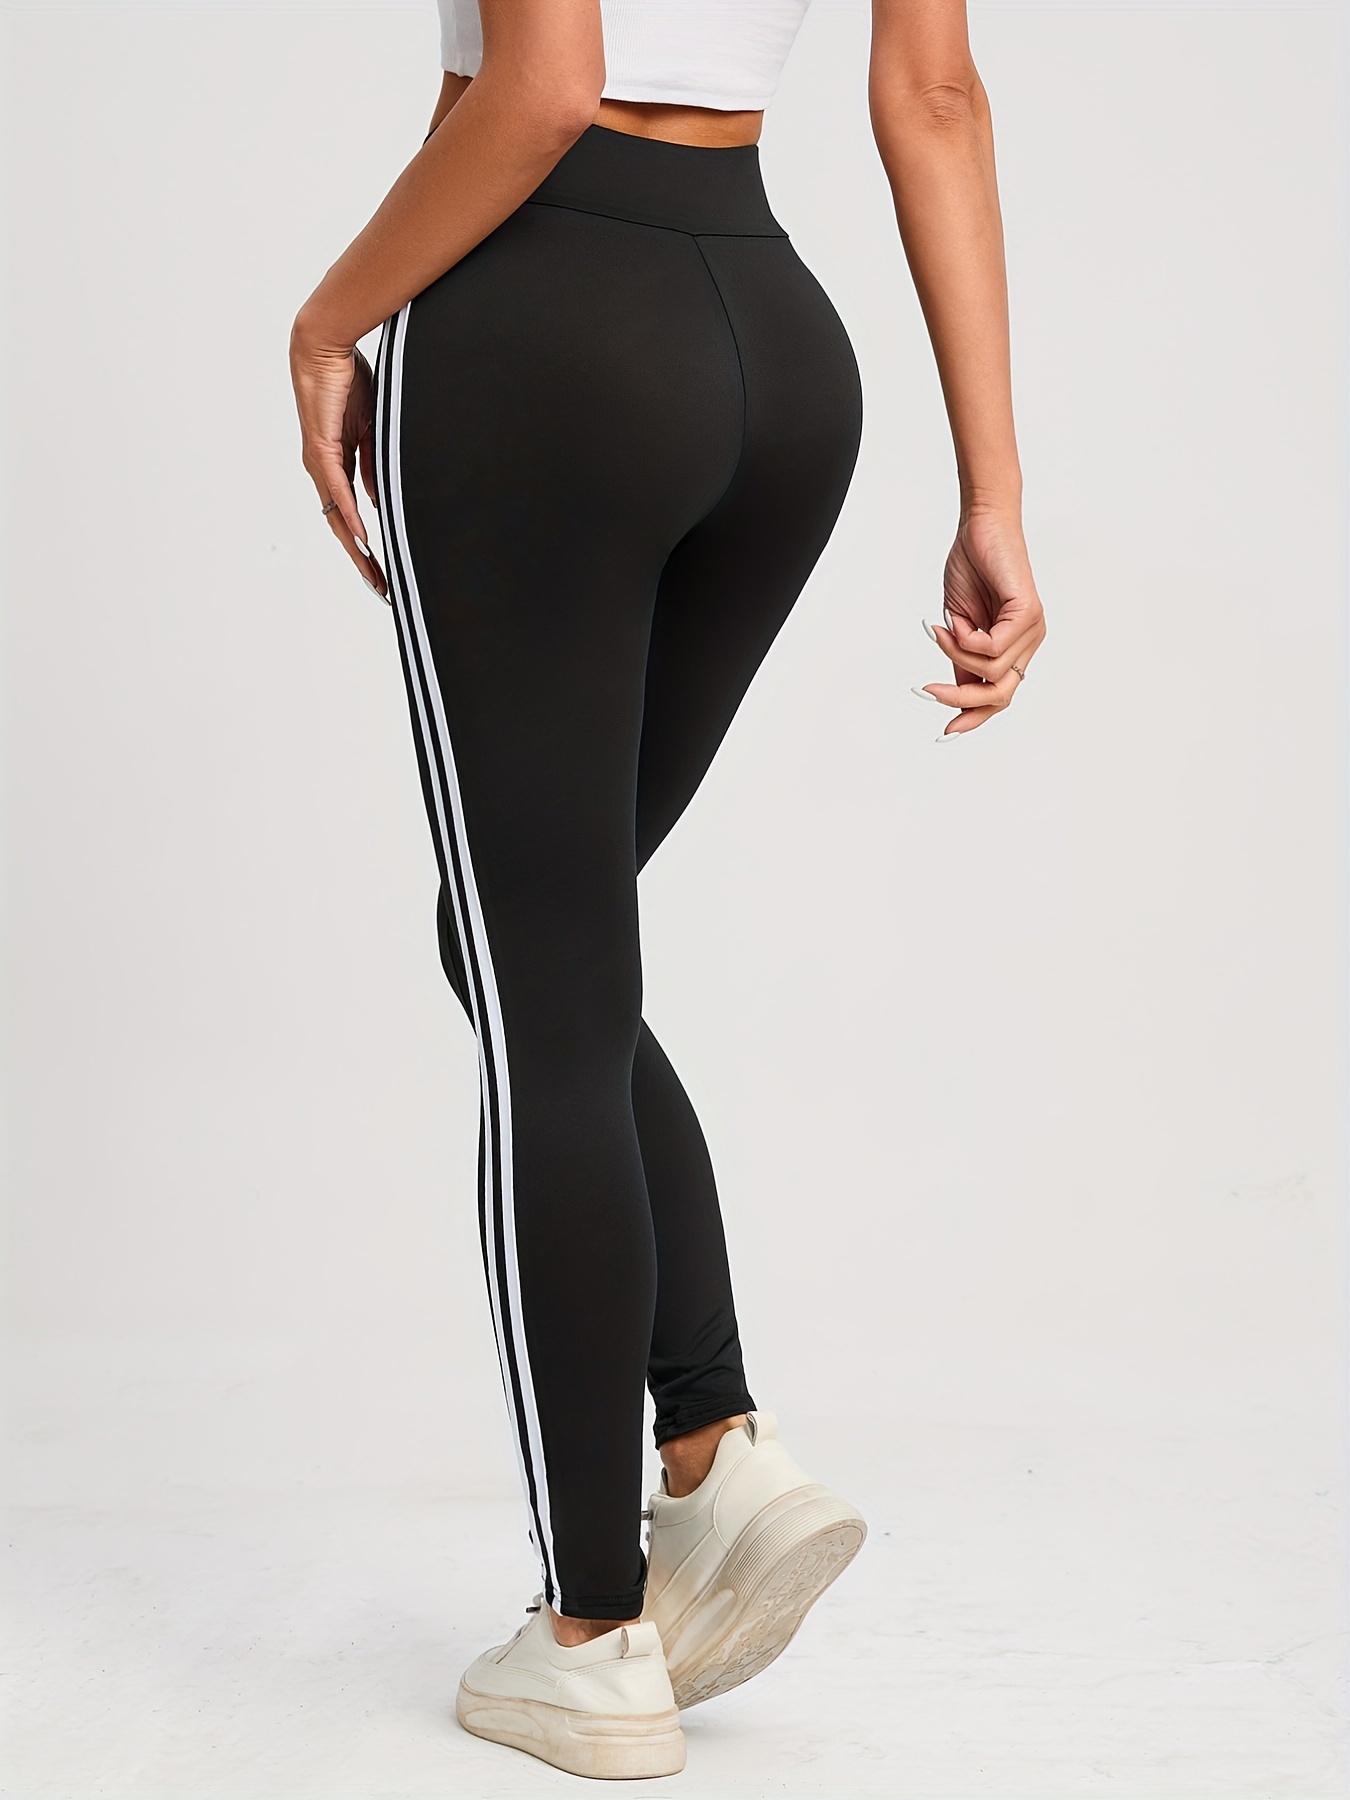 Adidas Women Leggings High waist Small Black white Stripe Active Sports Gym  